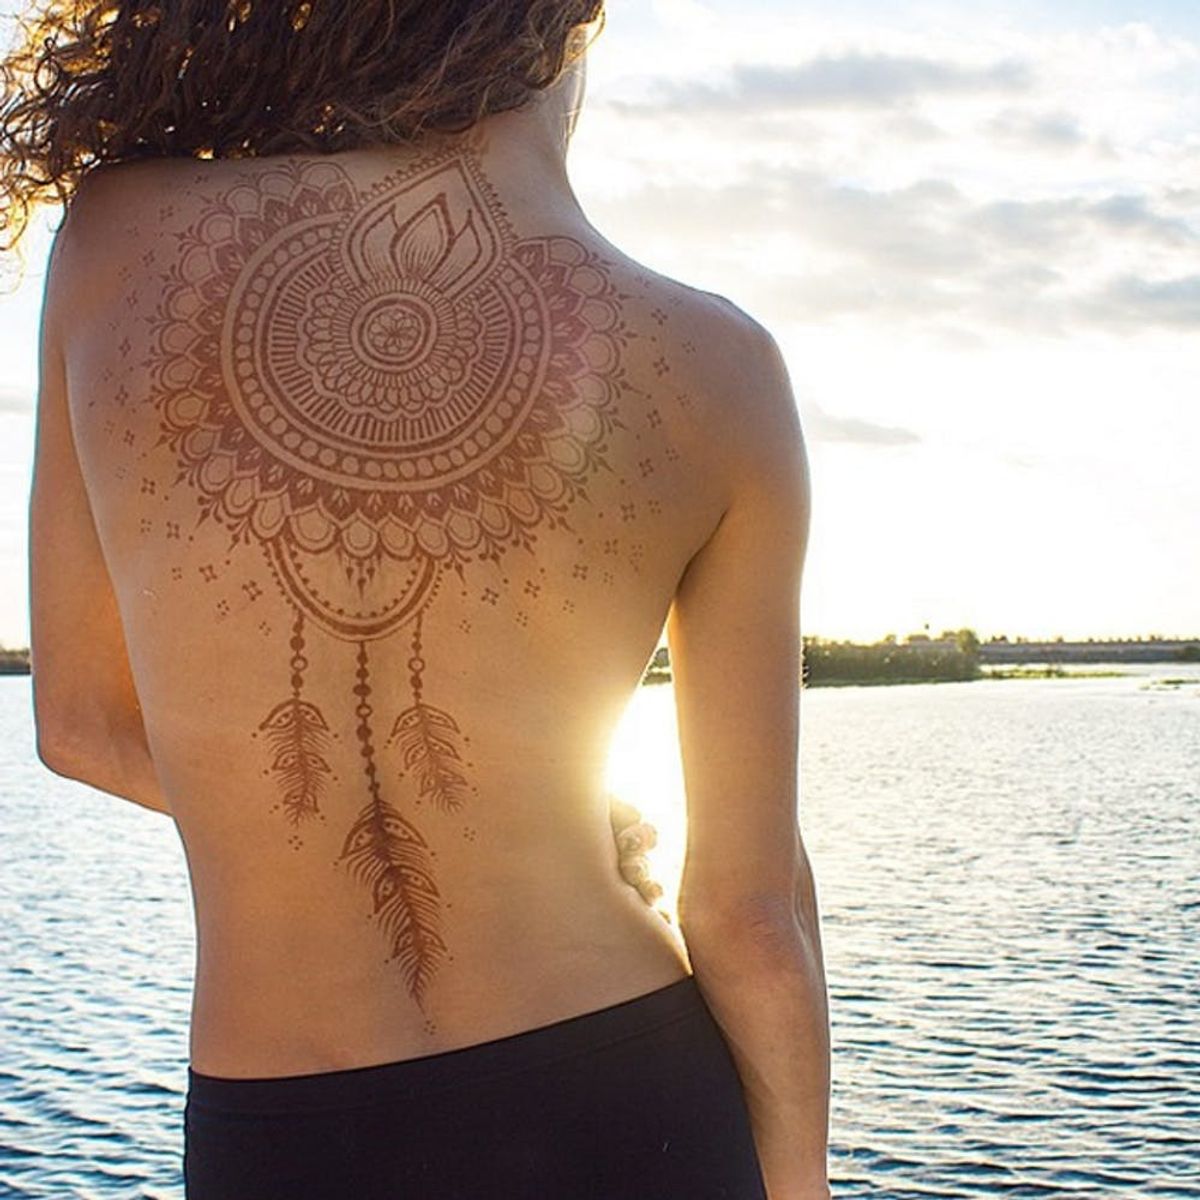 12 Henna Artists to Follow on Instagram